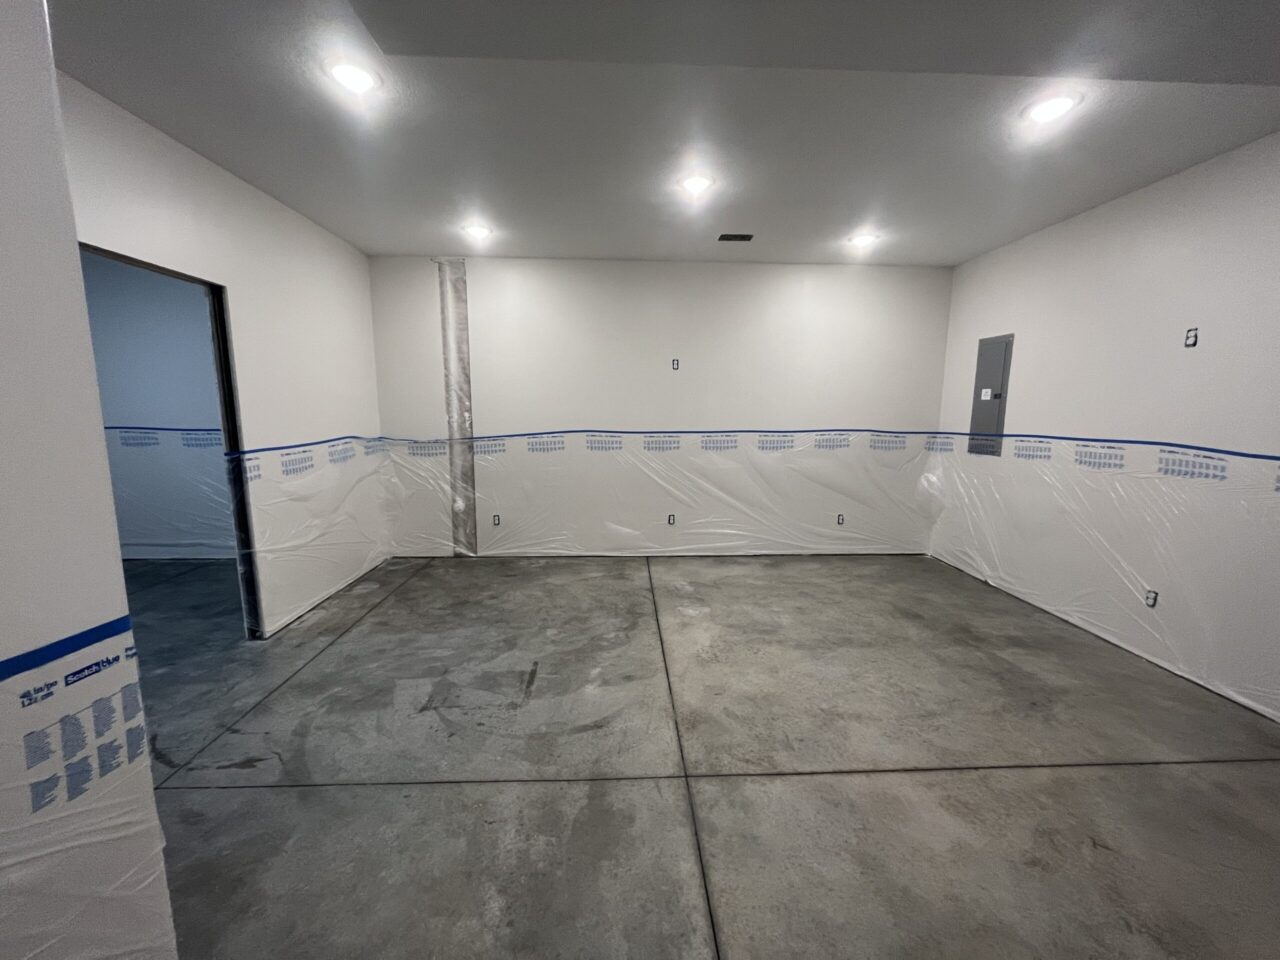 concrete basement floor